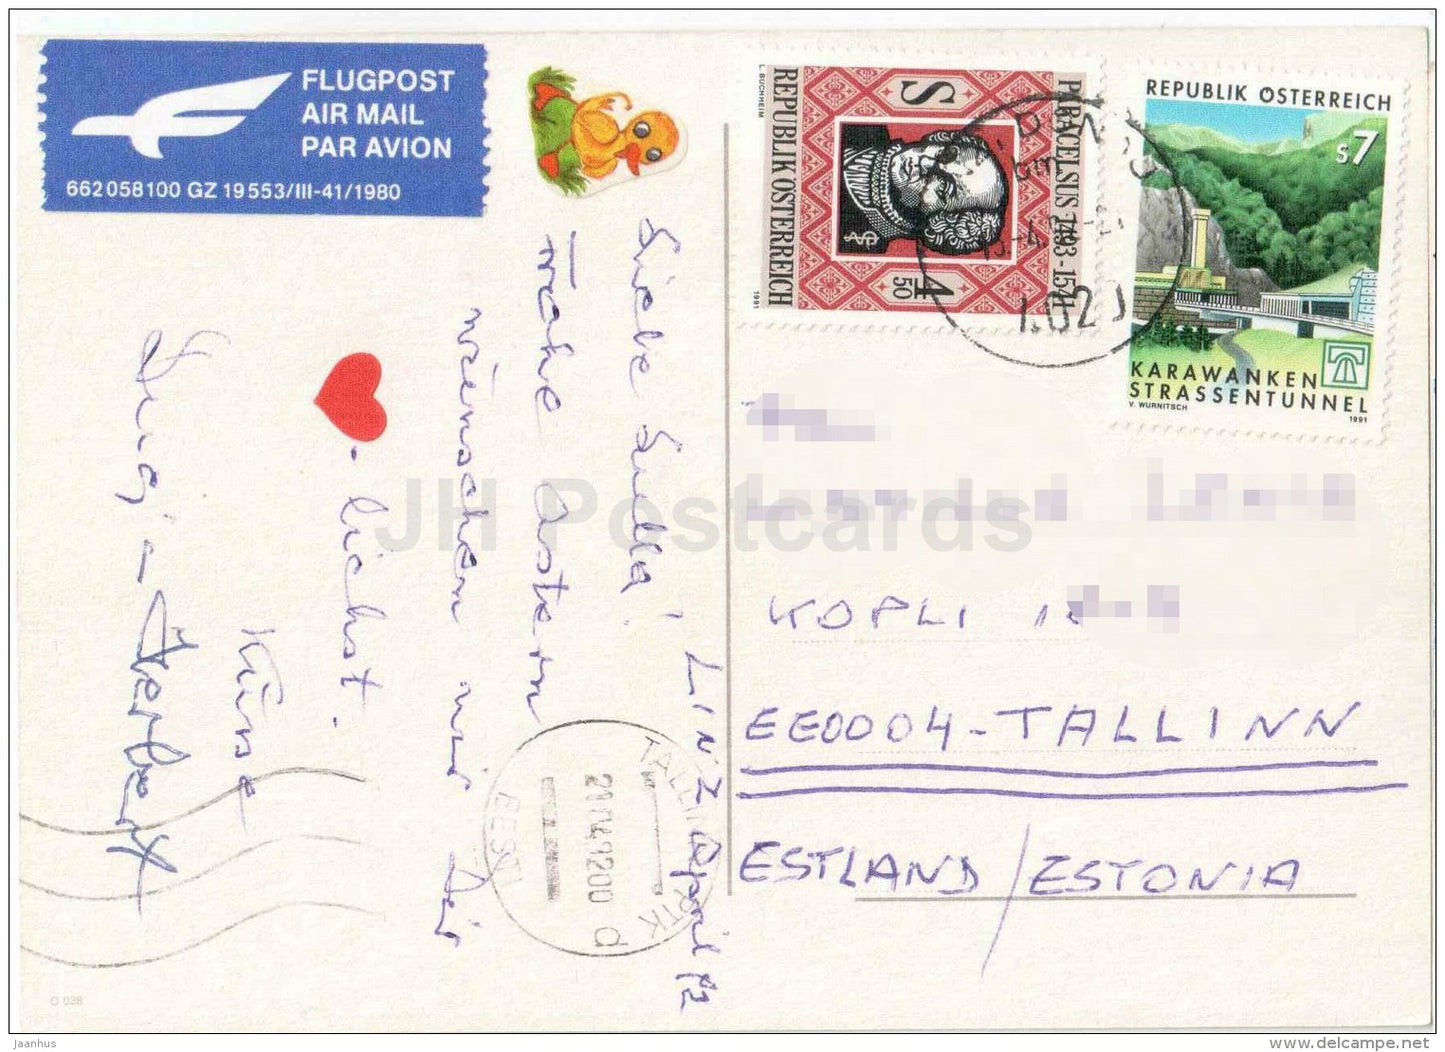 Easter greeting card - Ein frohes Osterfest - eggs - Par Avion - Paracelsus - sent from Austria to Estonia 1992 - JH Postcards